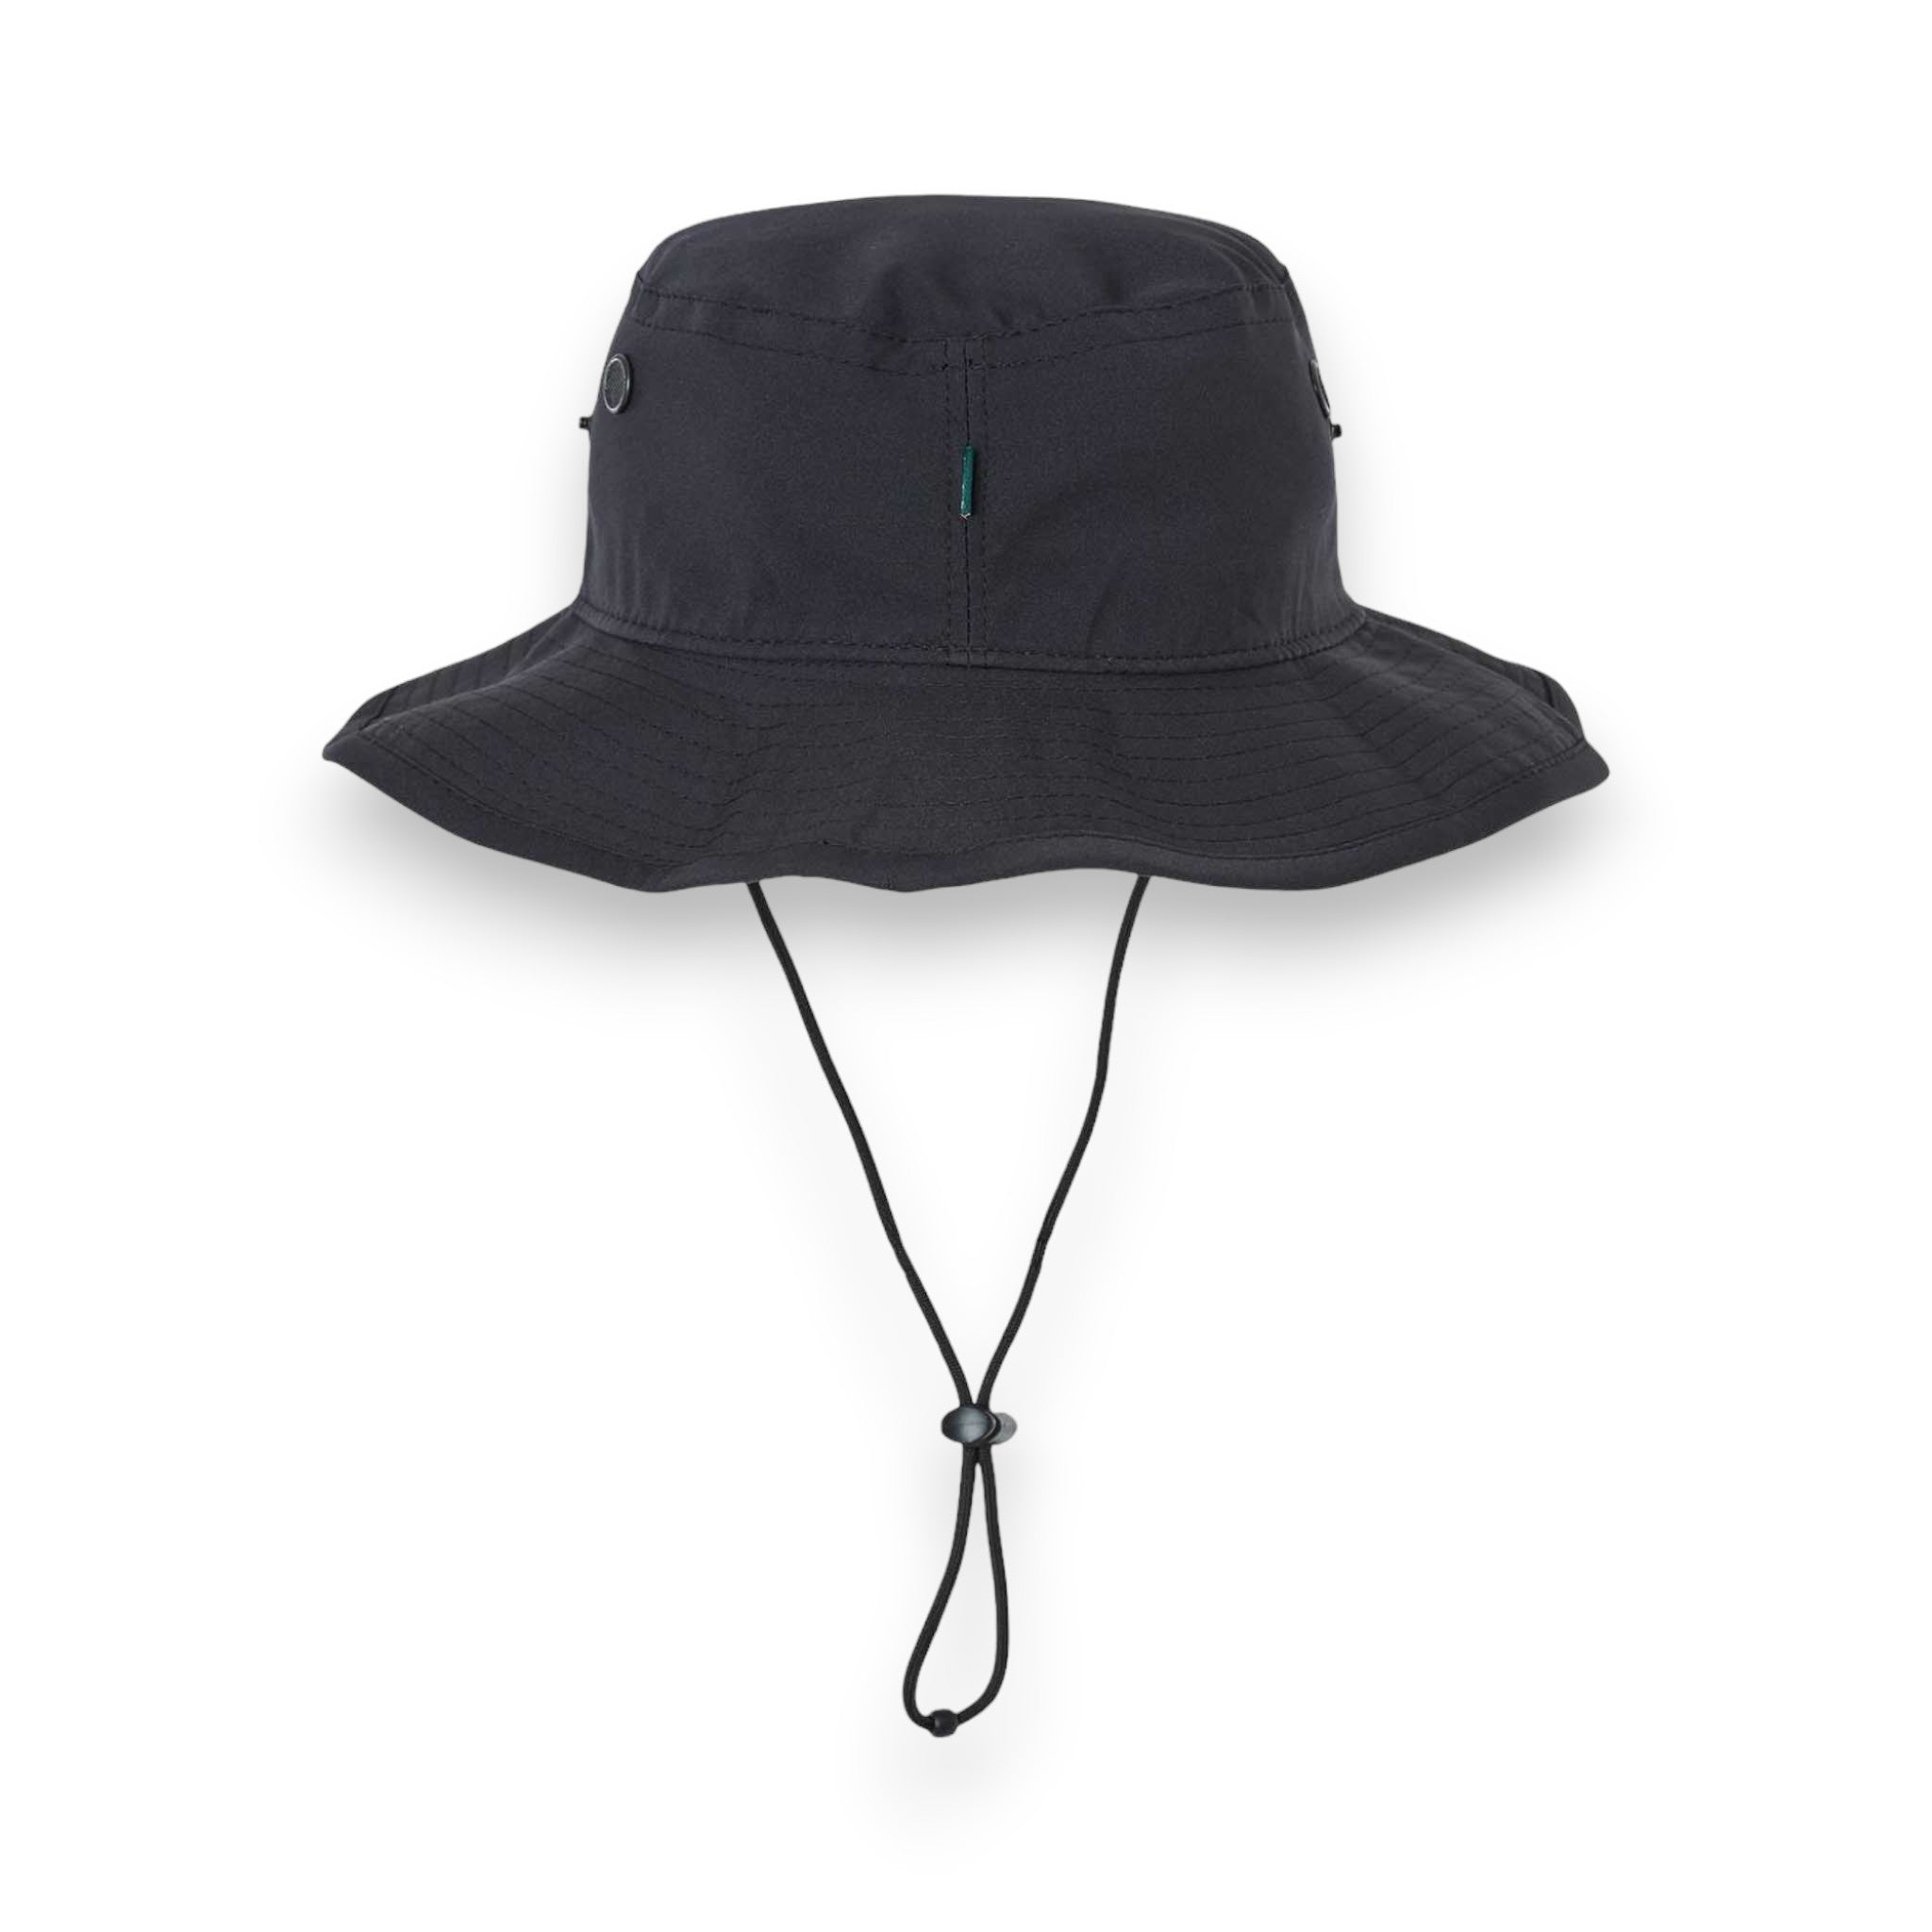 Back view of LEGACY CFB custom hat in black